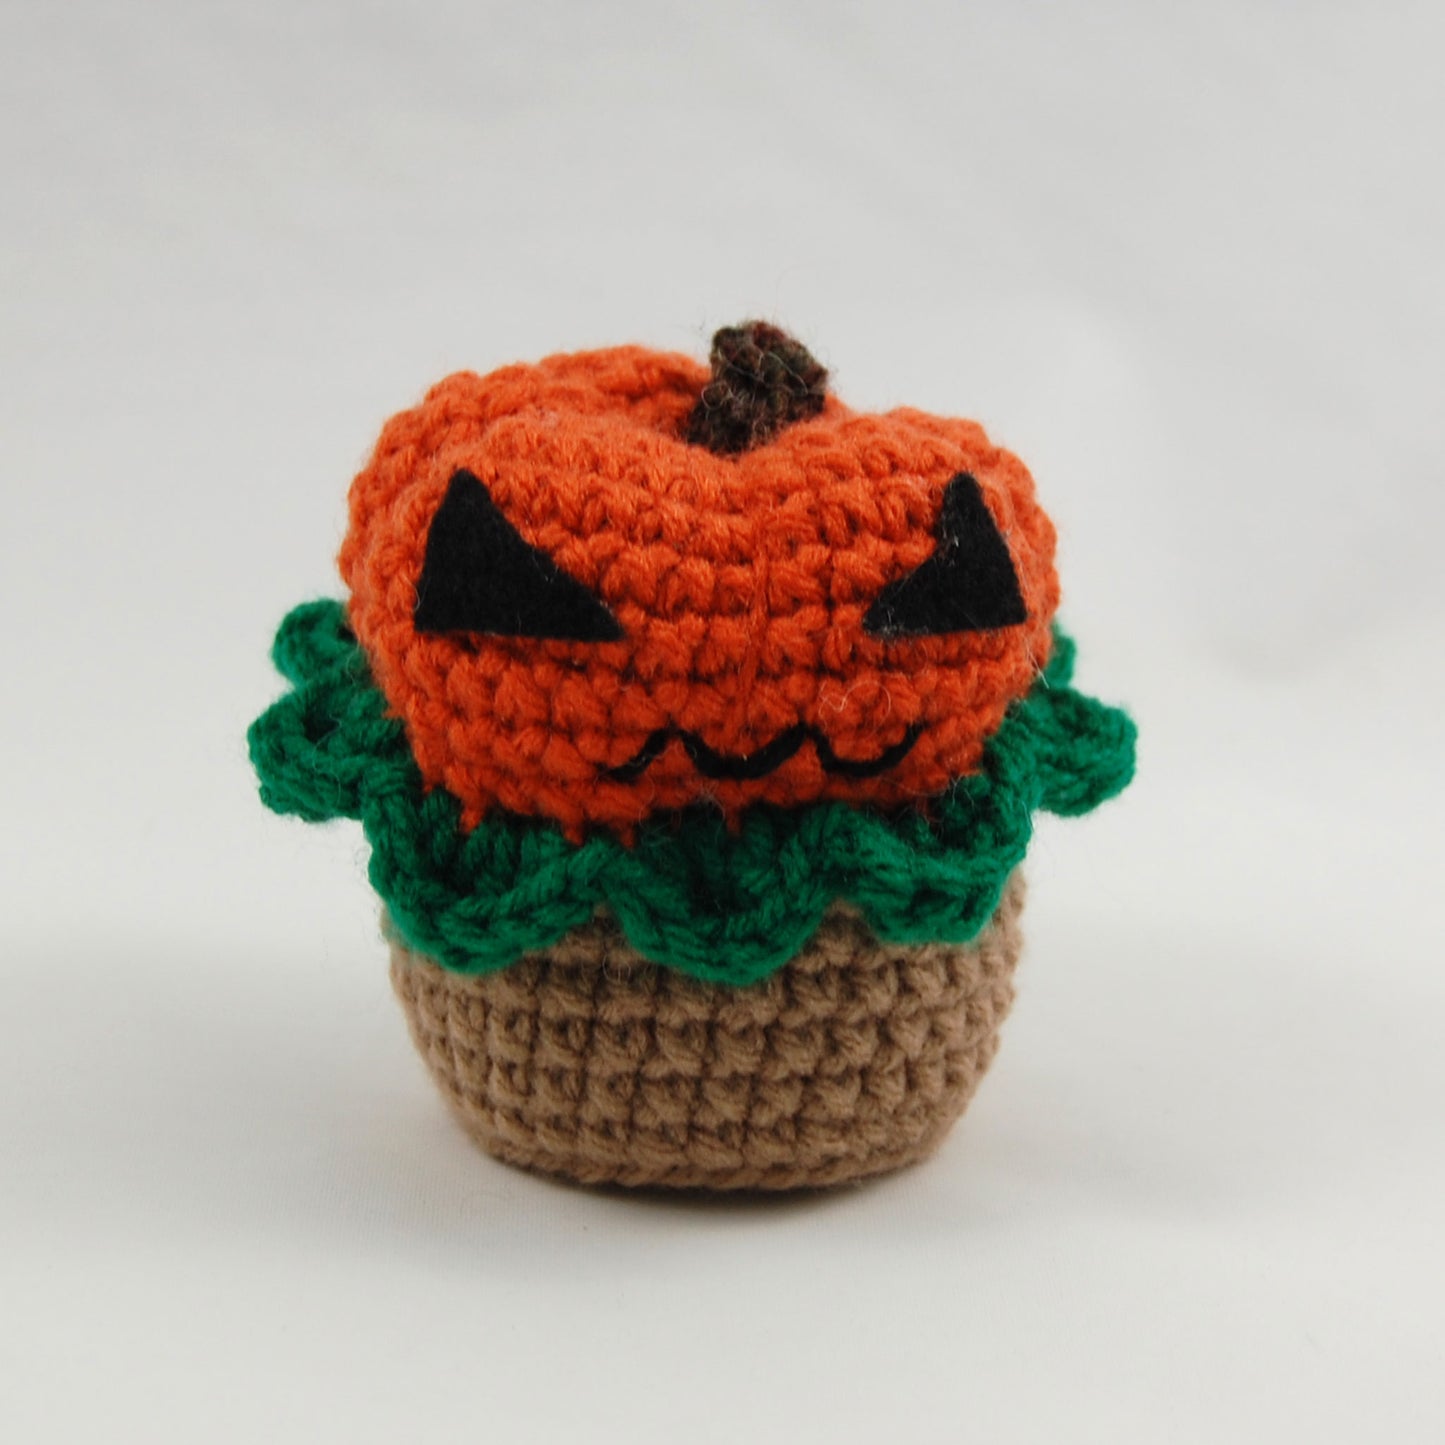 Jack-o'-lantern Crochet Cupcake